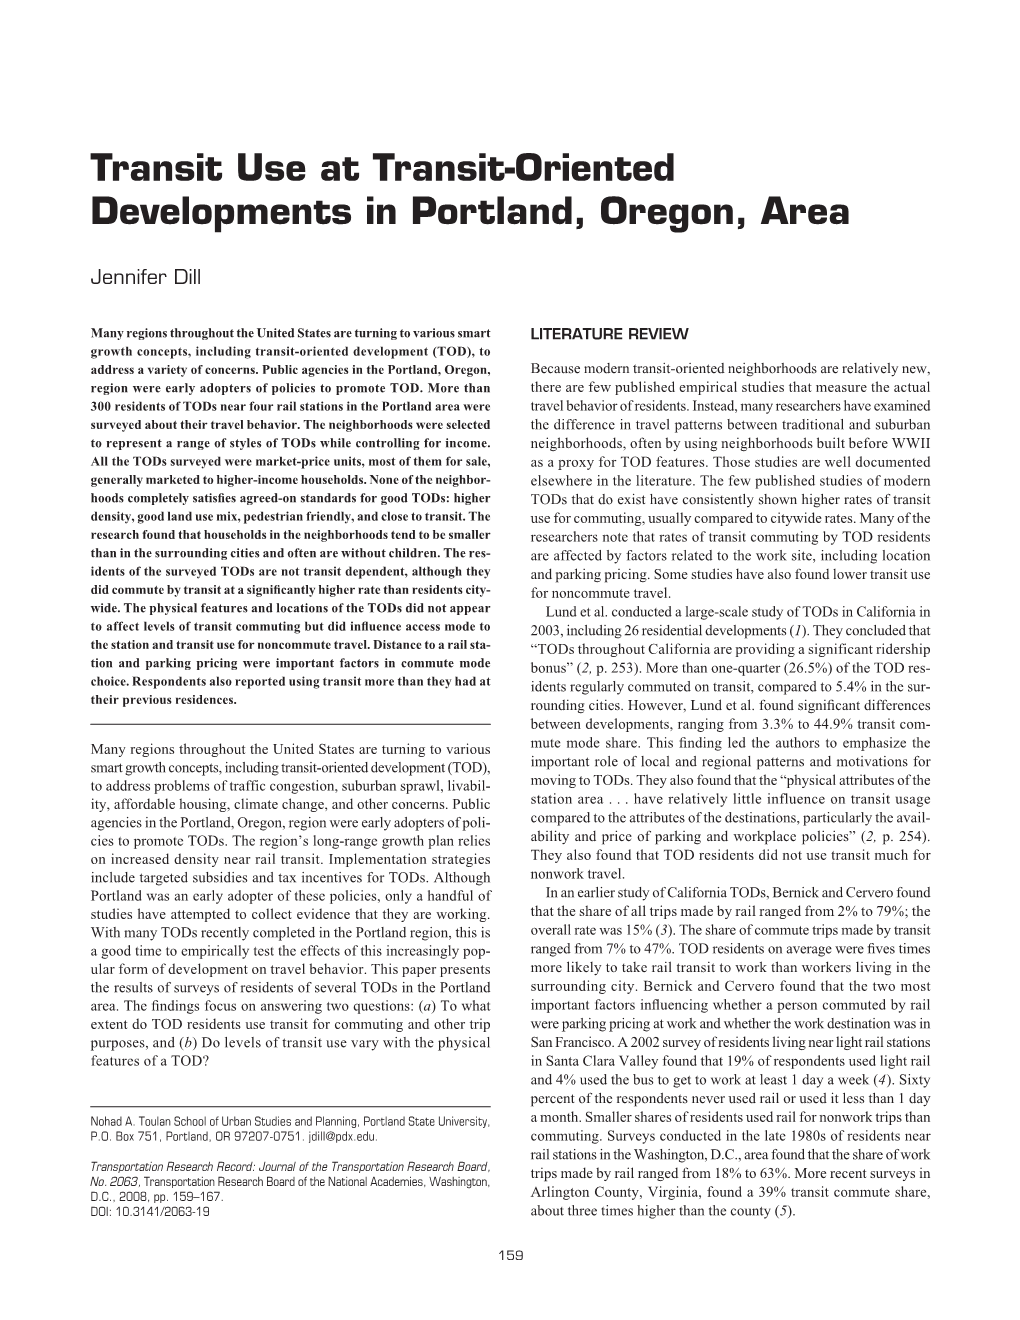 Transit Use at Transit-Oriented Developments in Portland, Oregon, Area